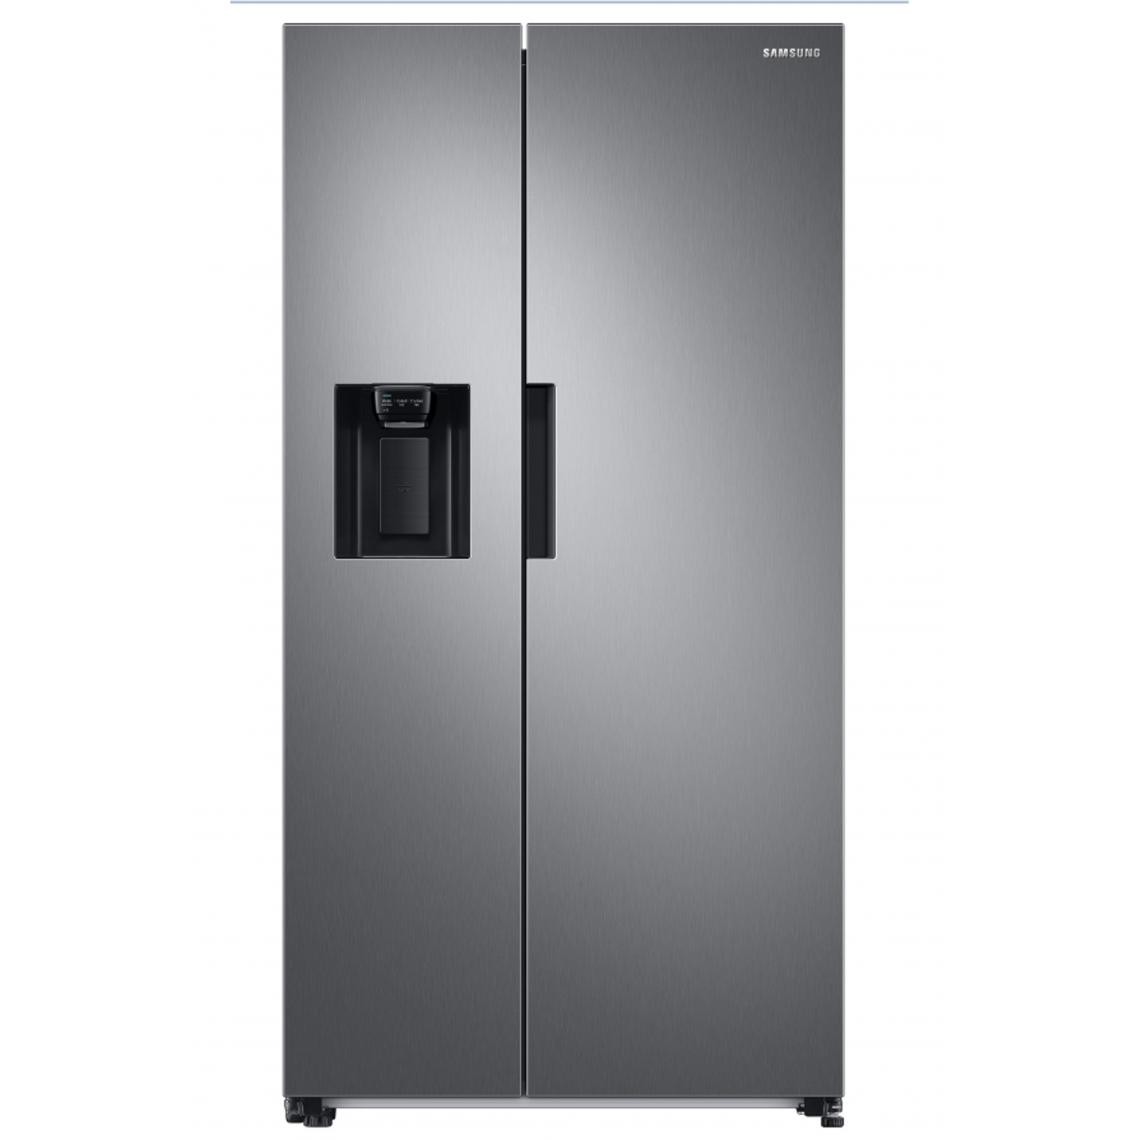 Samsung - Refrigerateur americain Samsung RS67A8510S9 - Réfrigérateur américain